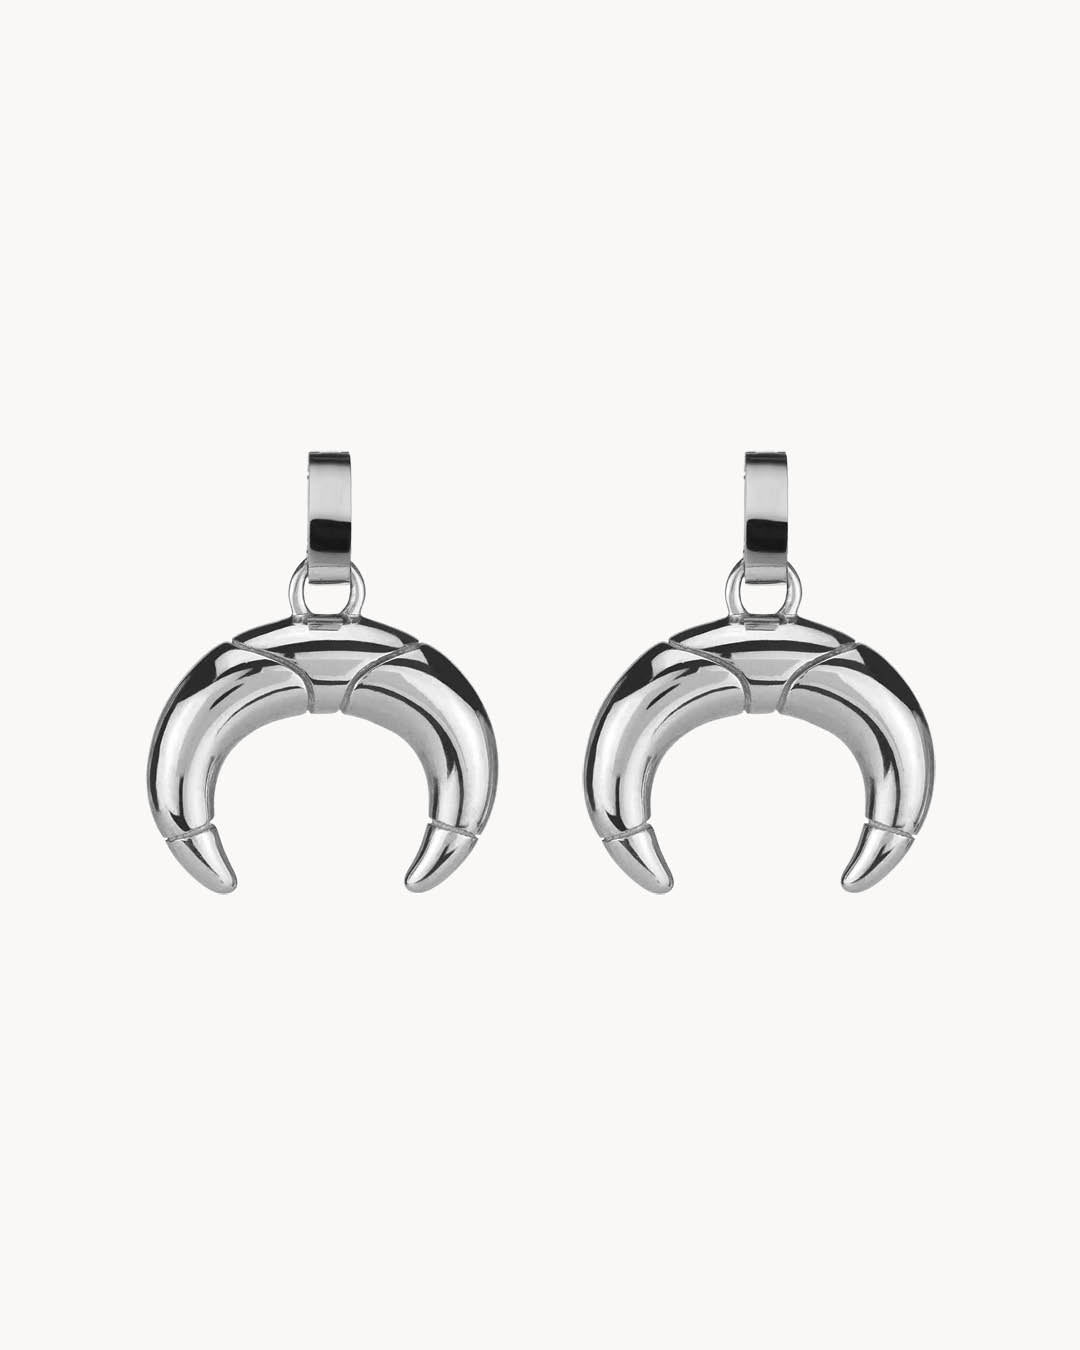 Dainty Crescent Horn Earring Pendants, Silver